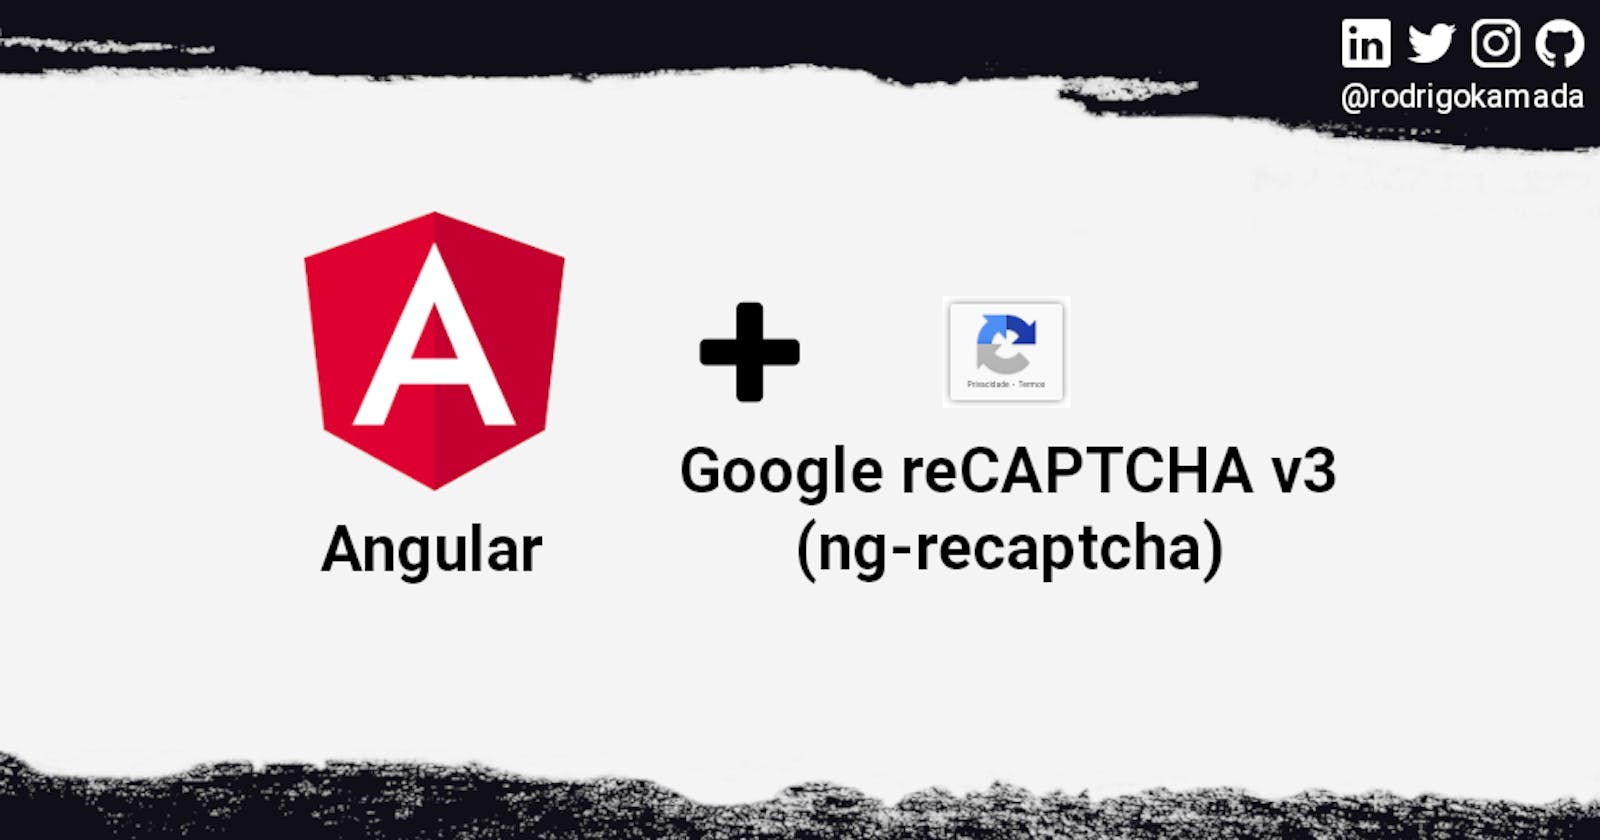 Adding the Google reCAPTCHA v3 to an Angular application